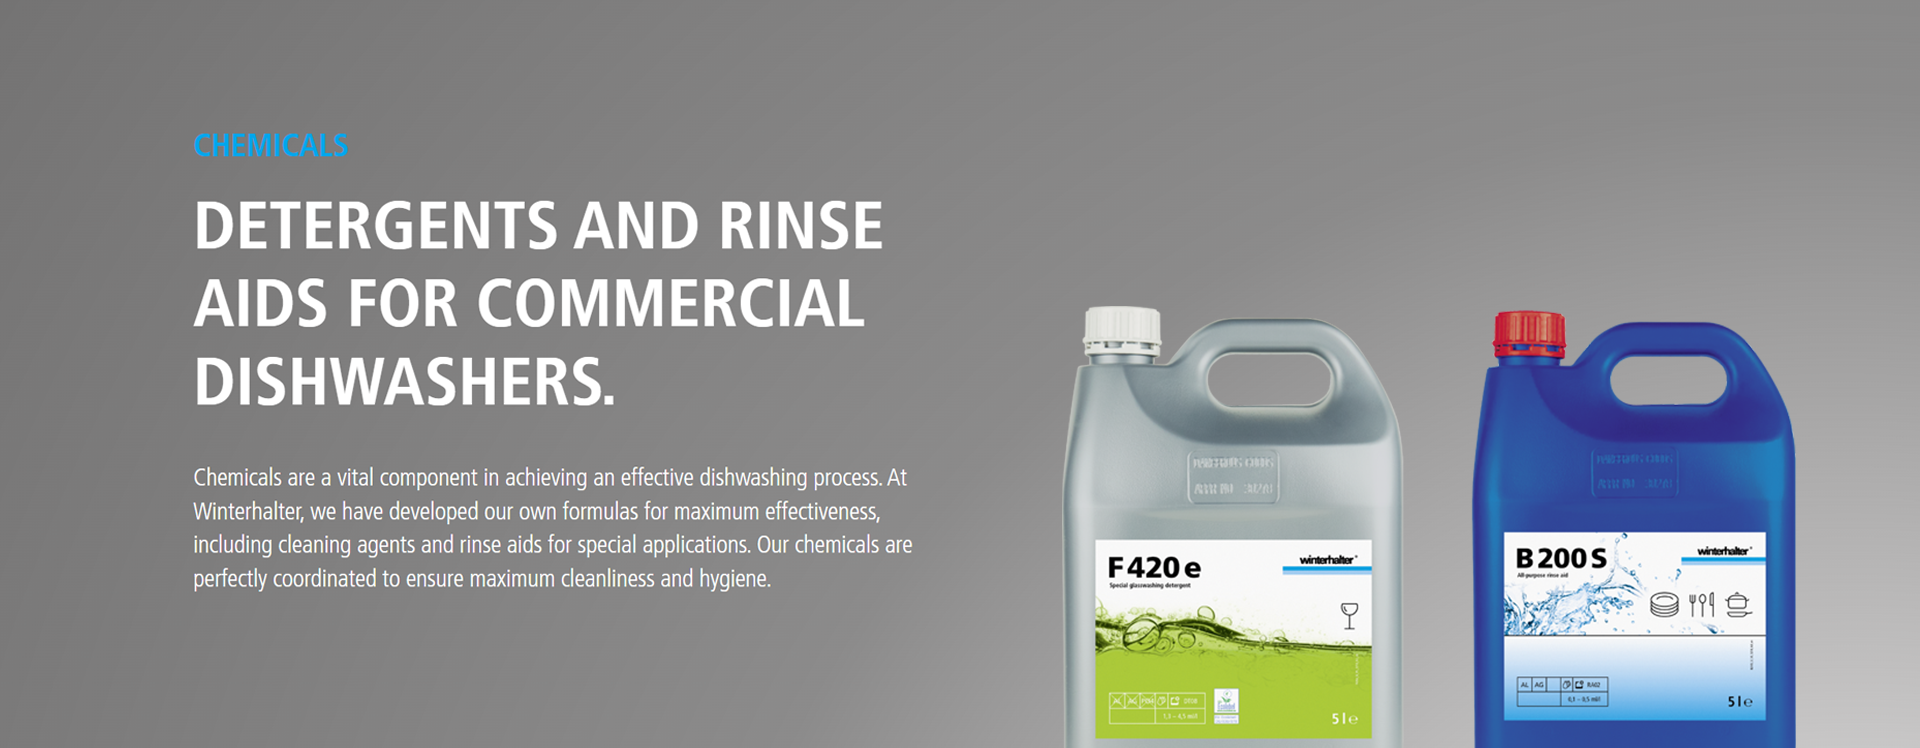 chemicals-detergents-rinse-aids_shop_winterhalter_au_ff